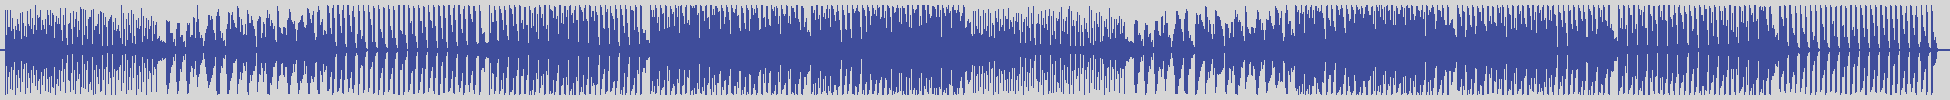 nf_boyz_records [NFY063] Alfred - Glissom [Original Mix] audio wave form